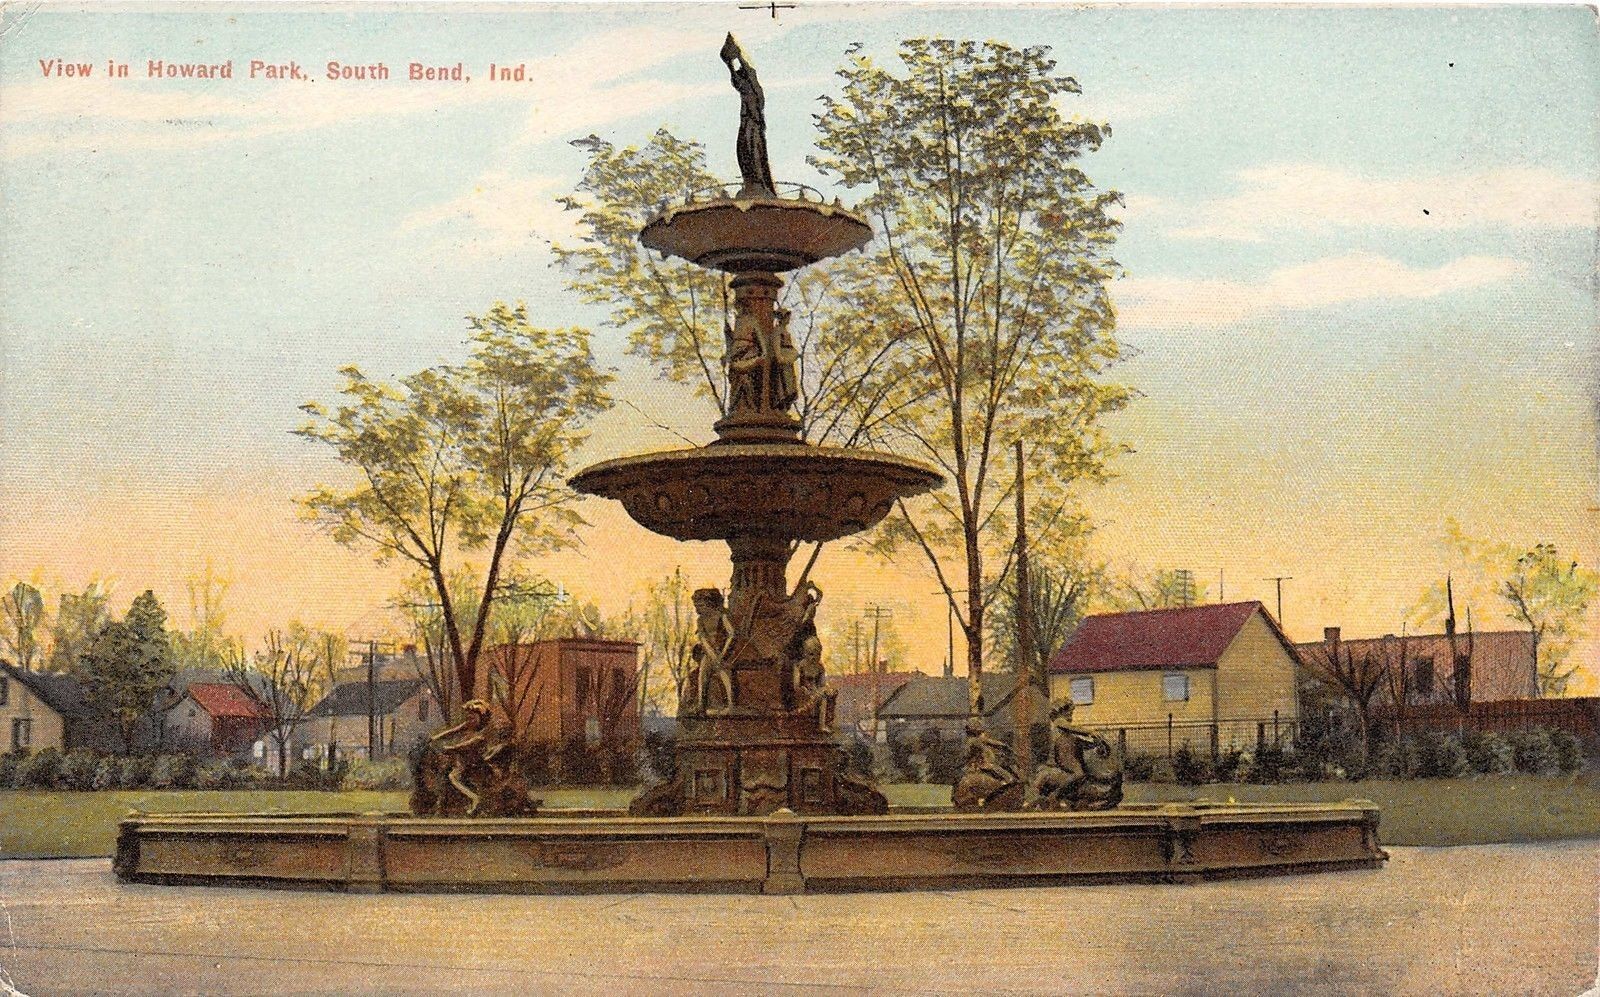 Postcard of Studebaker Fountain in Howard Park